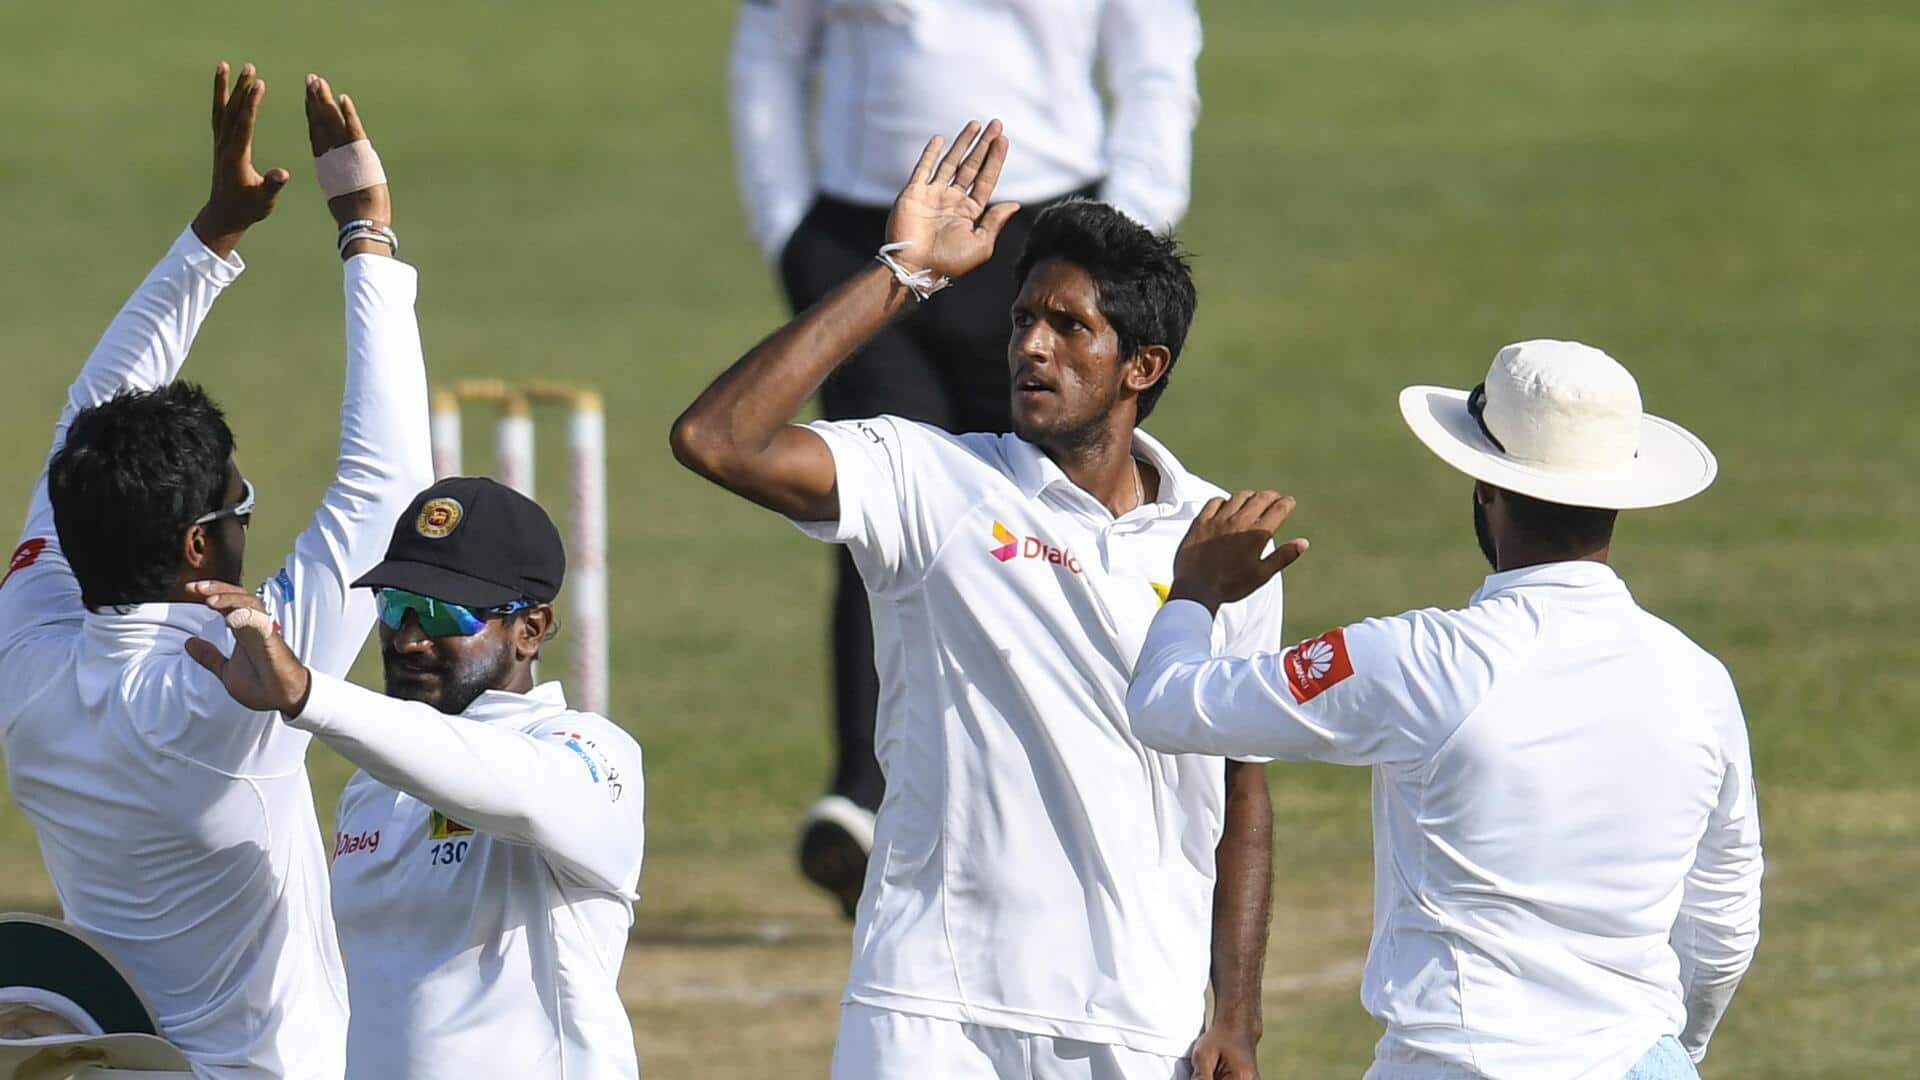 SL's Kasun Rajitha claims his second Test fifer: Stats